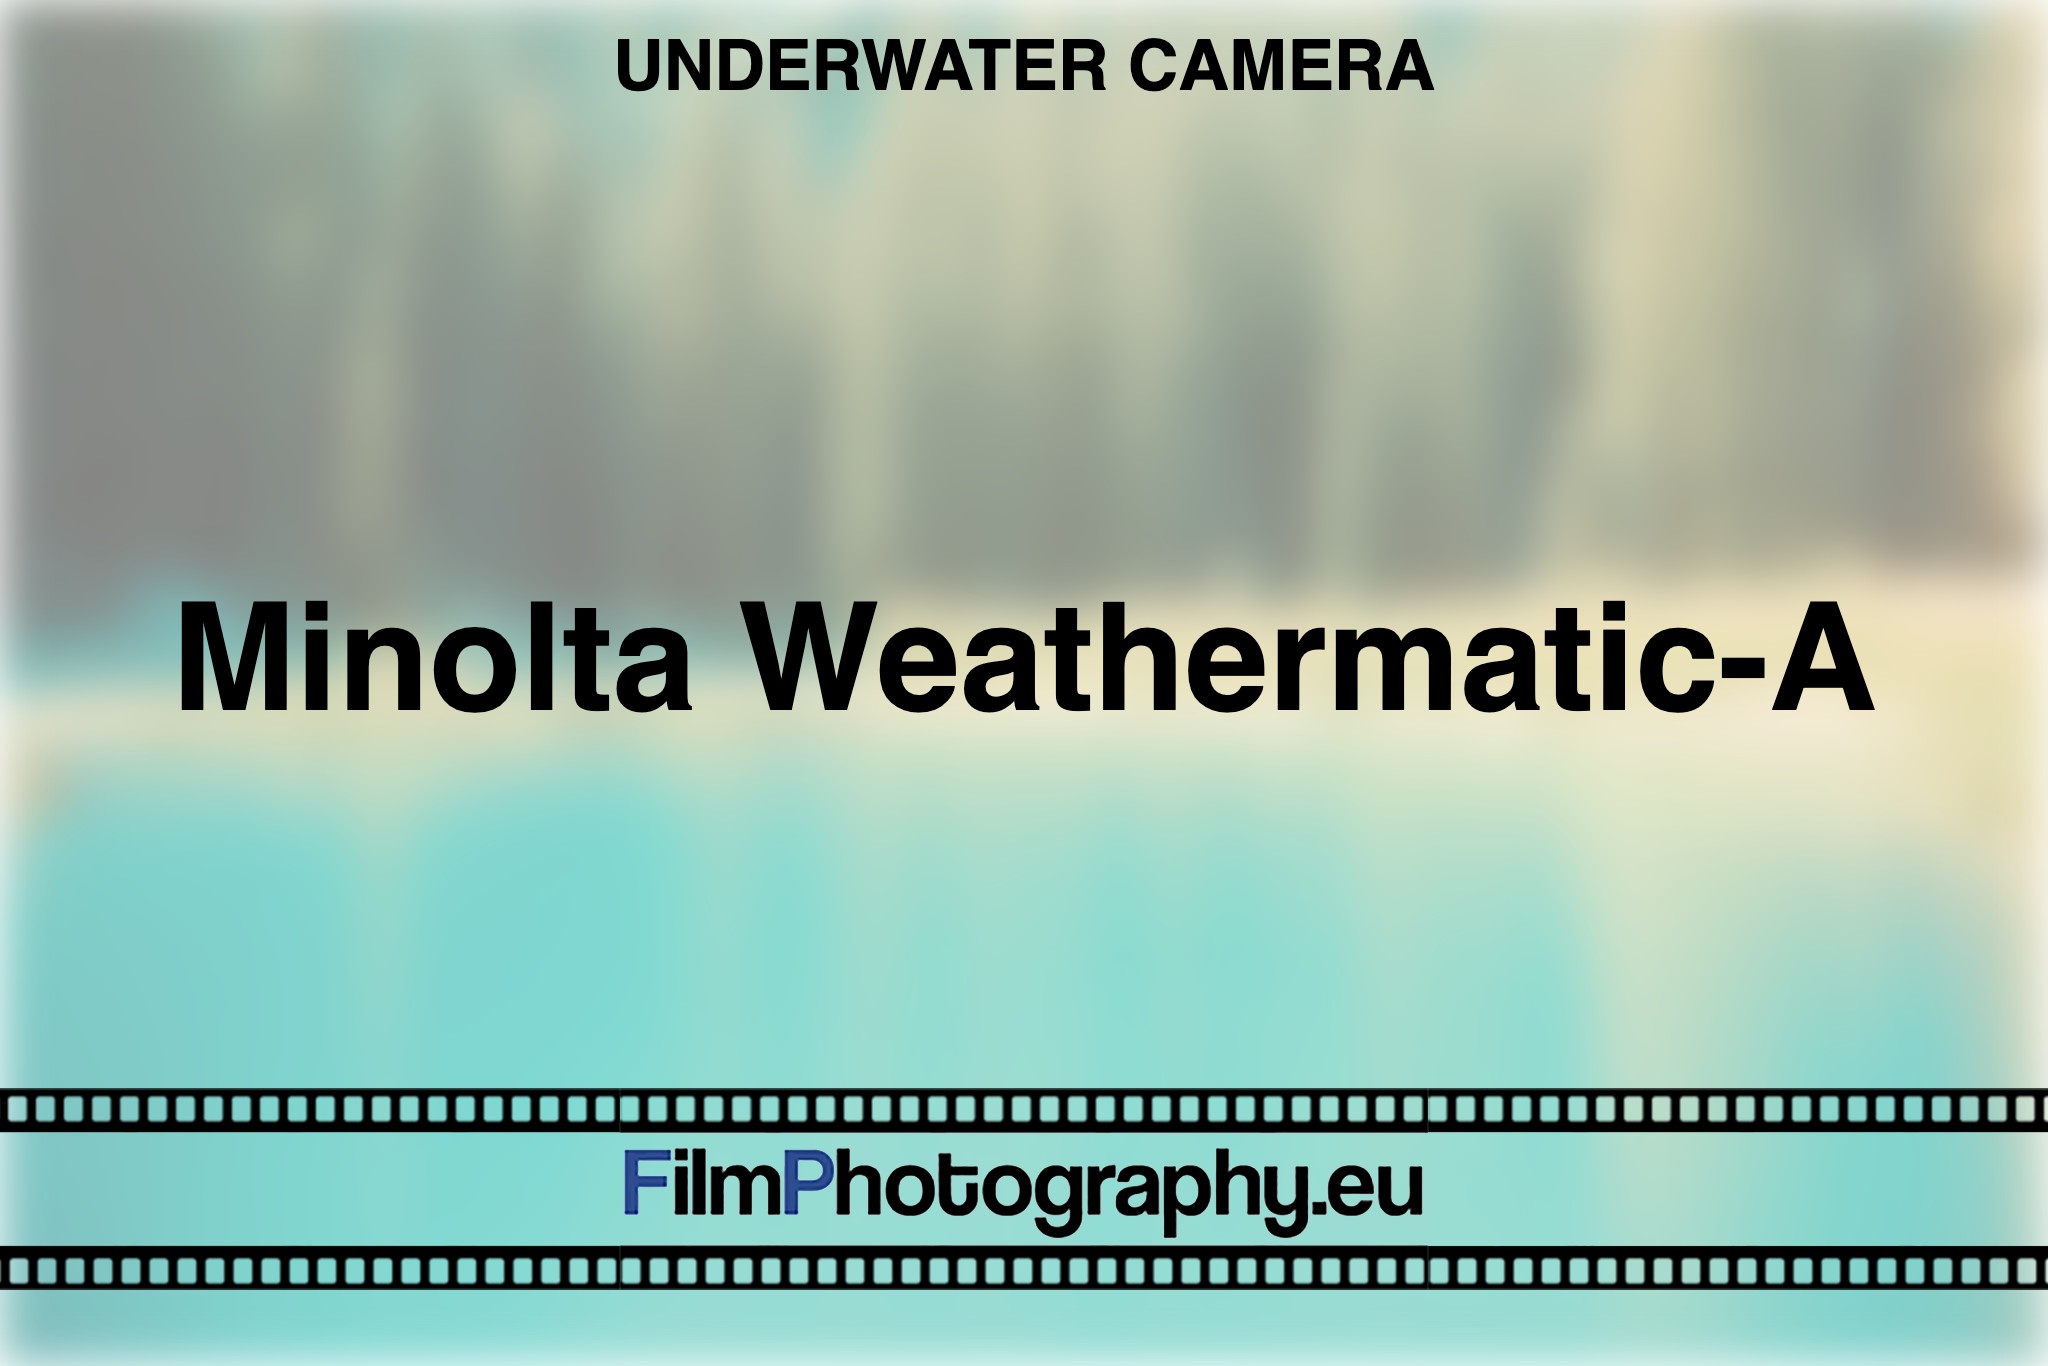 minolta-weathermatic-a-underwater-camera-bnv